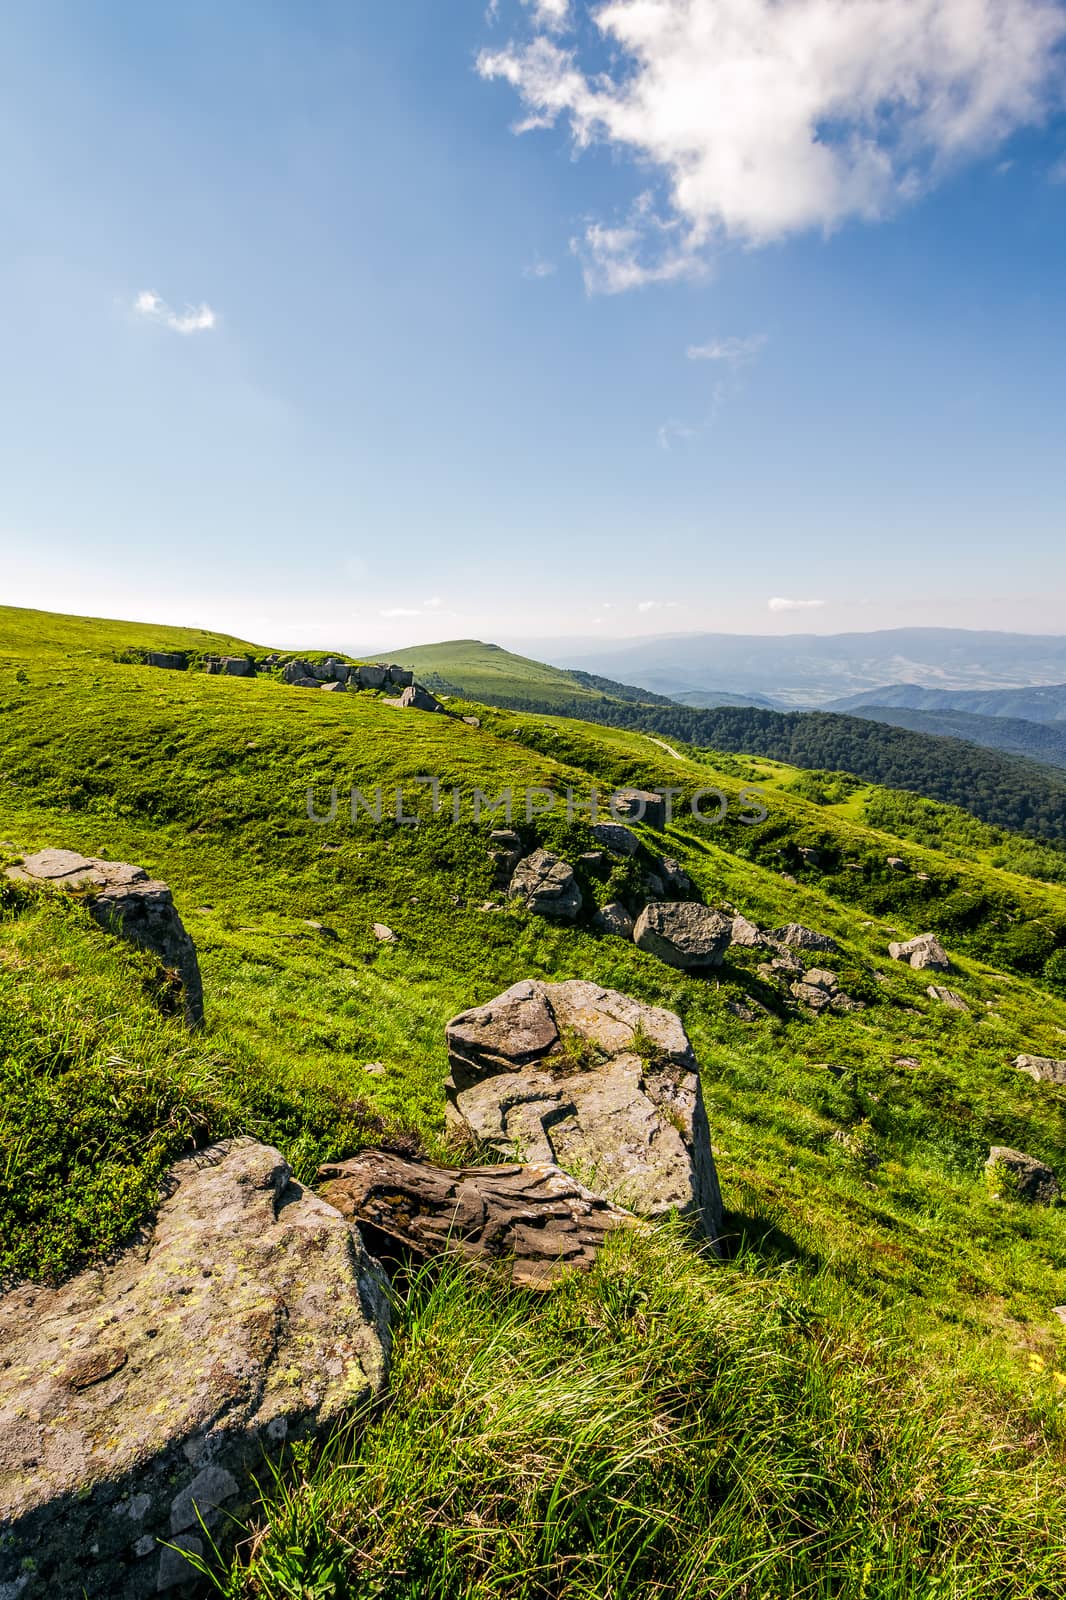 huge boulders on the edge of hillside by Pellinni